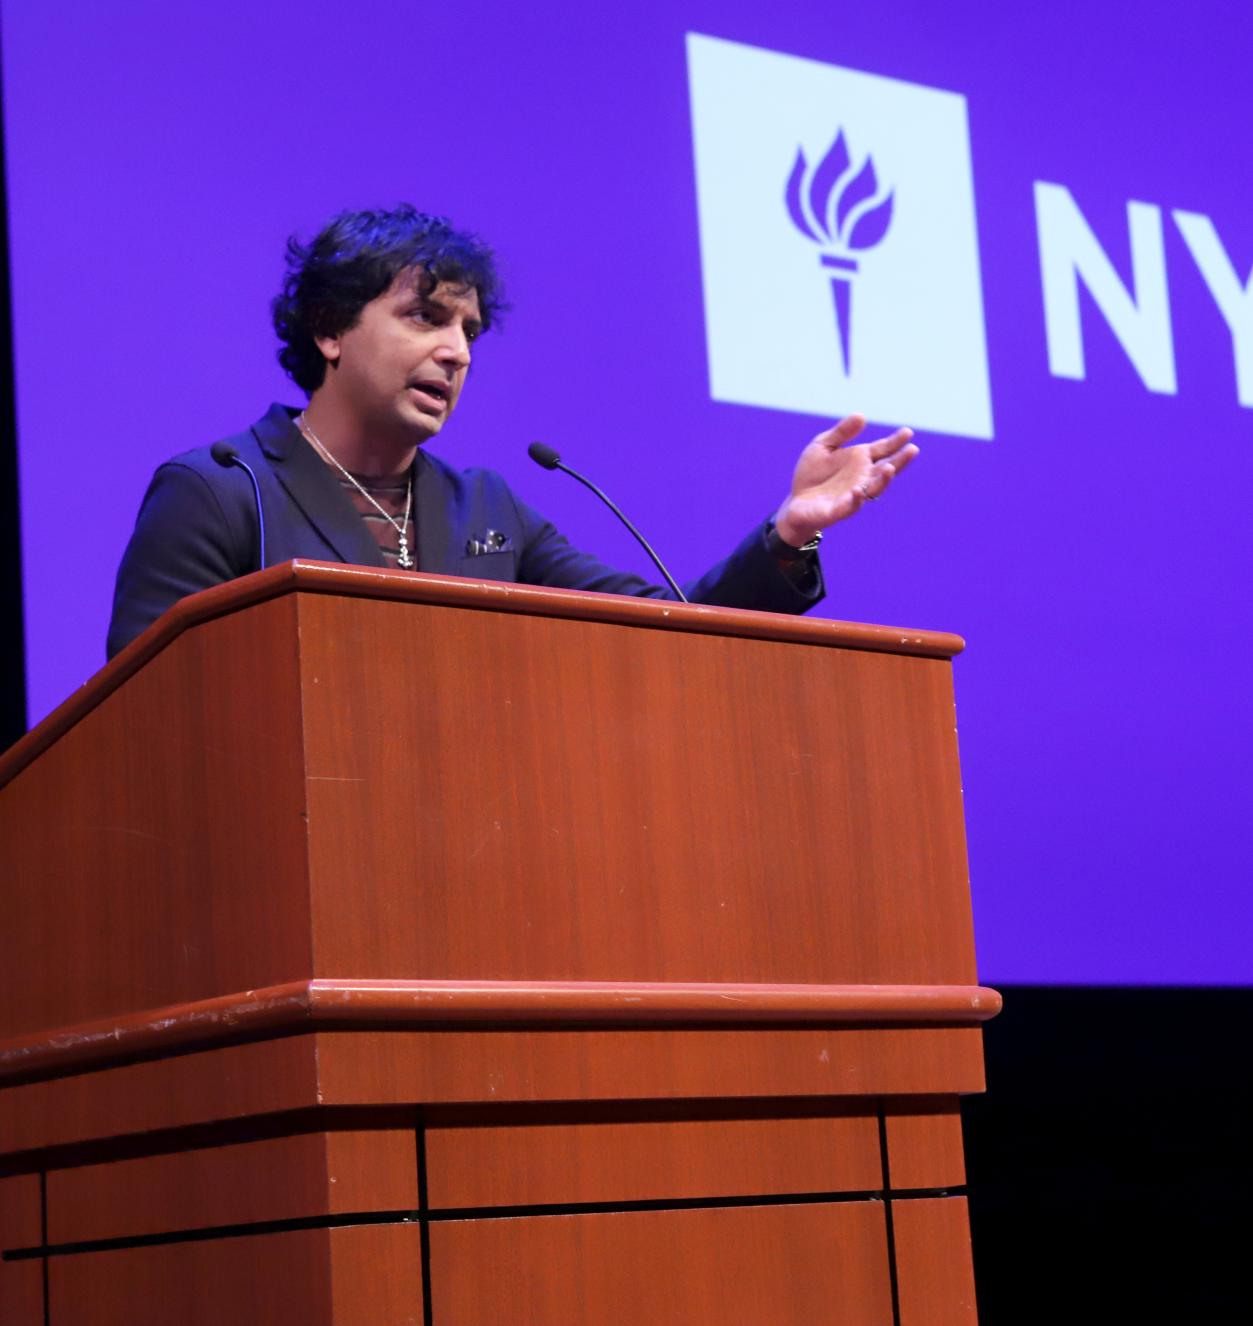 Filmmaker M. Night Shyamalan speaking at a podium in front of NYU logo background